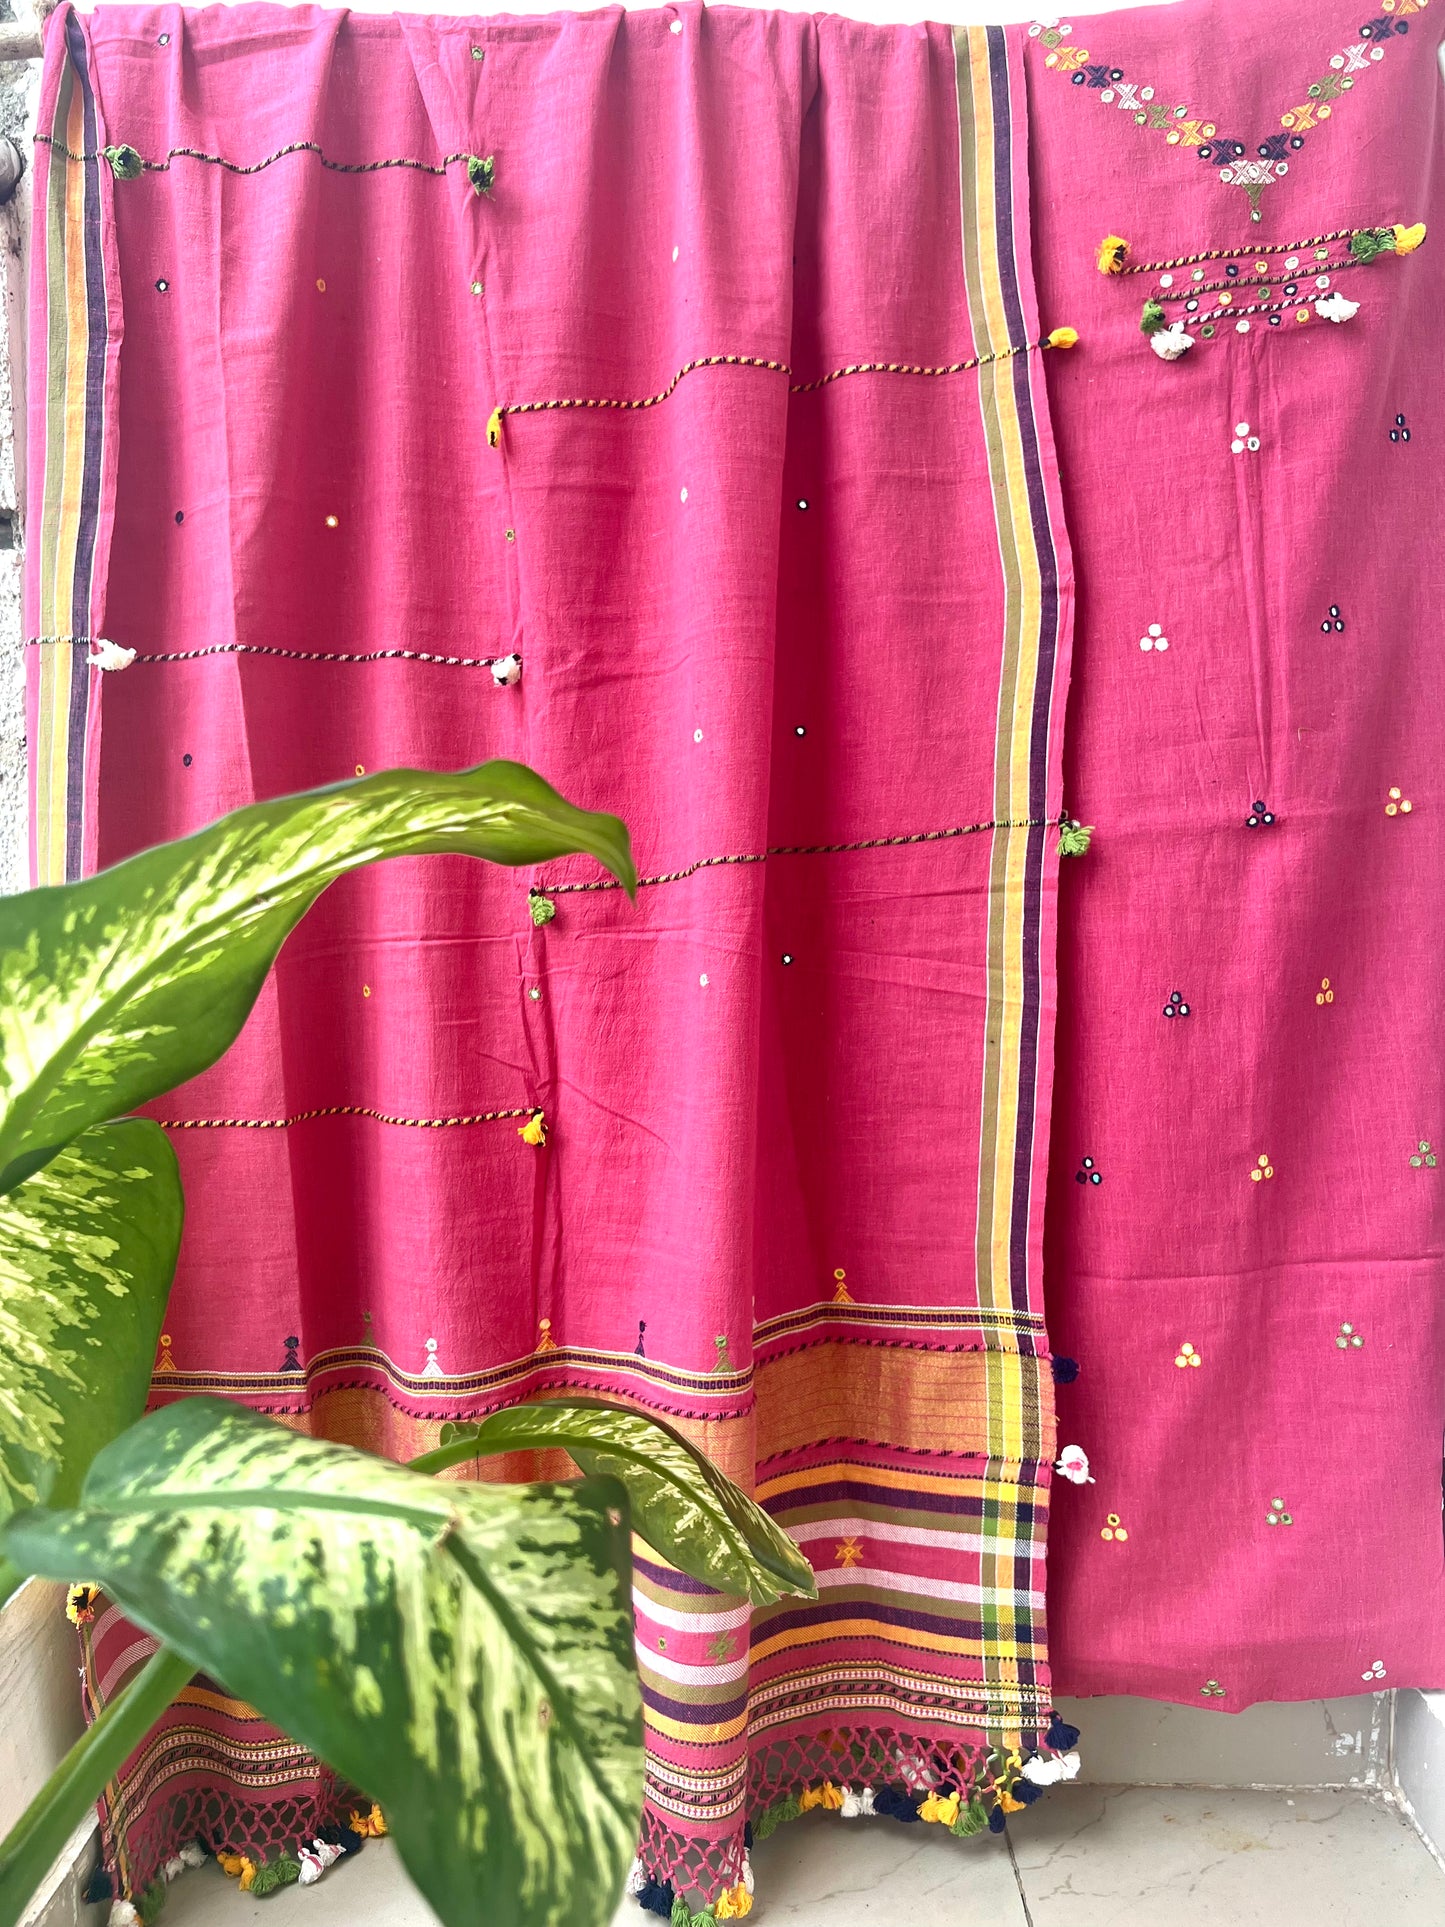 Handloom Bhujodi Kala Cotton Suit- In My Dreams